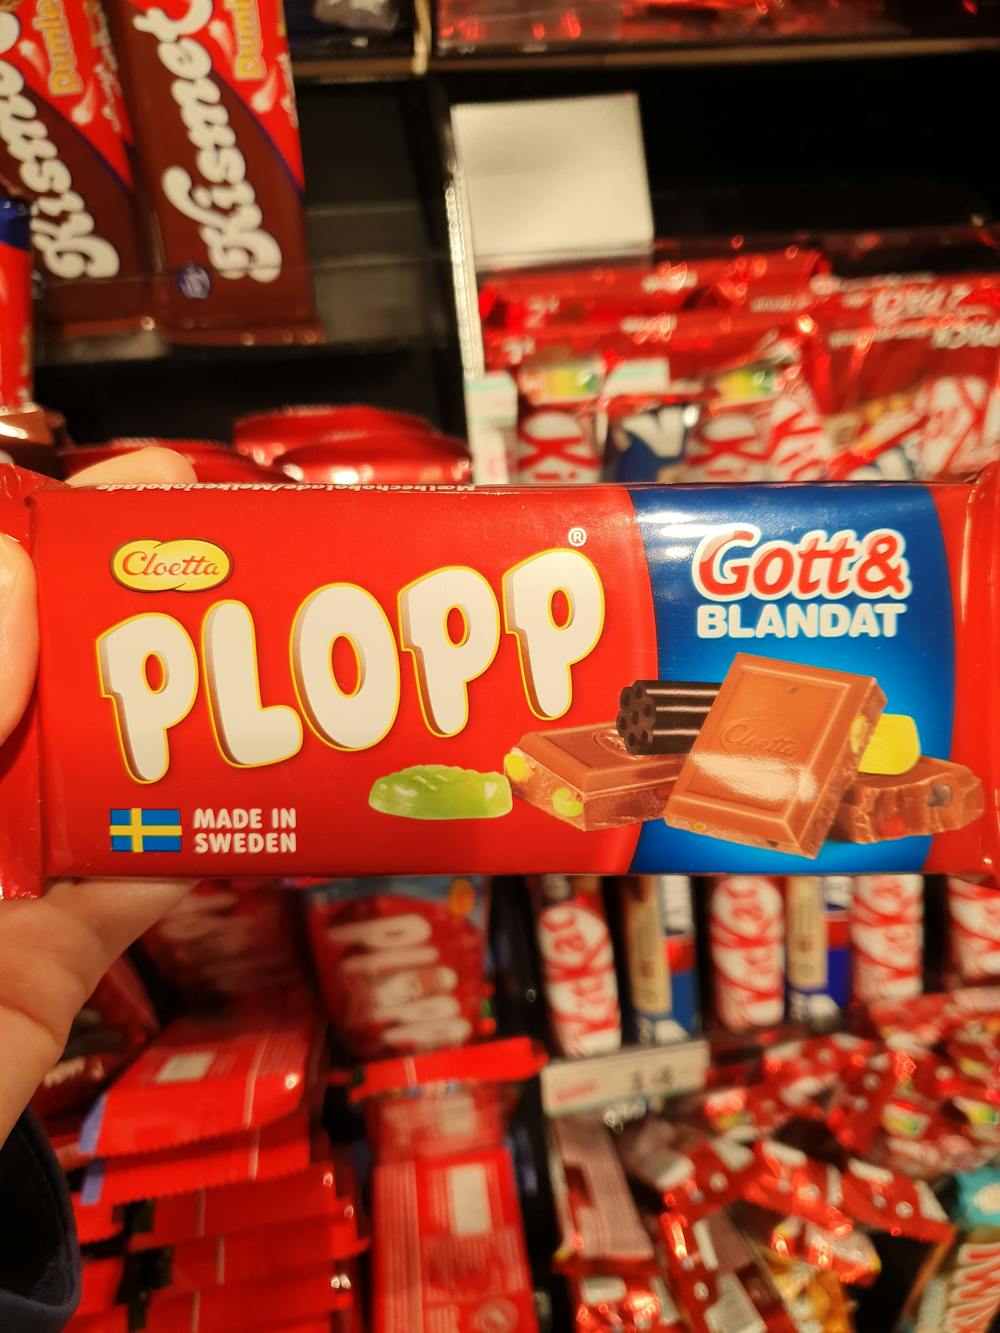 Gott & blandat plopp sjokolade, Cloetta